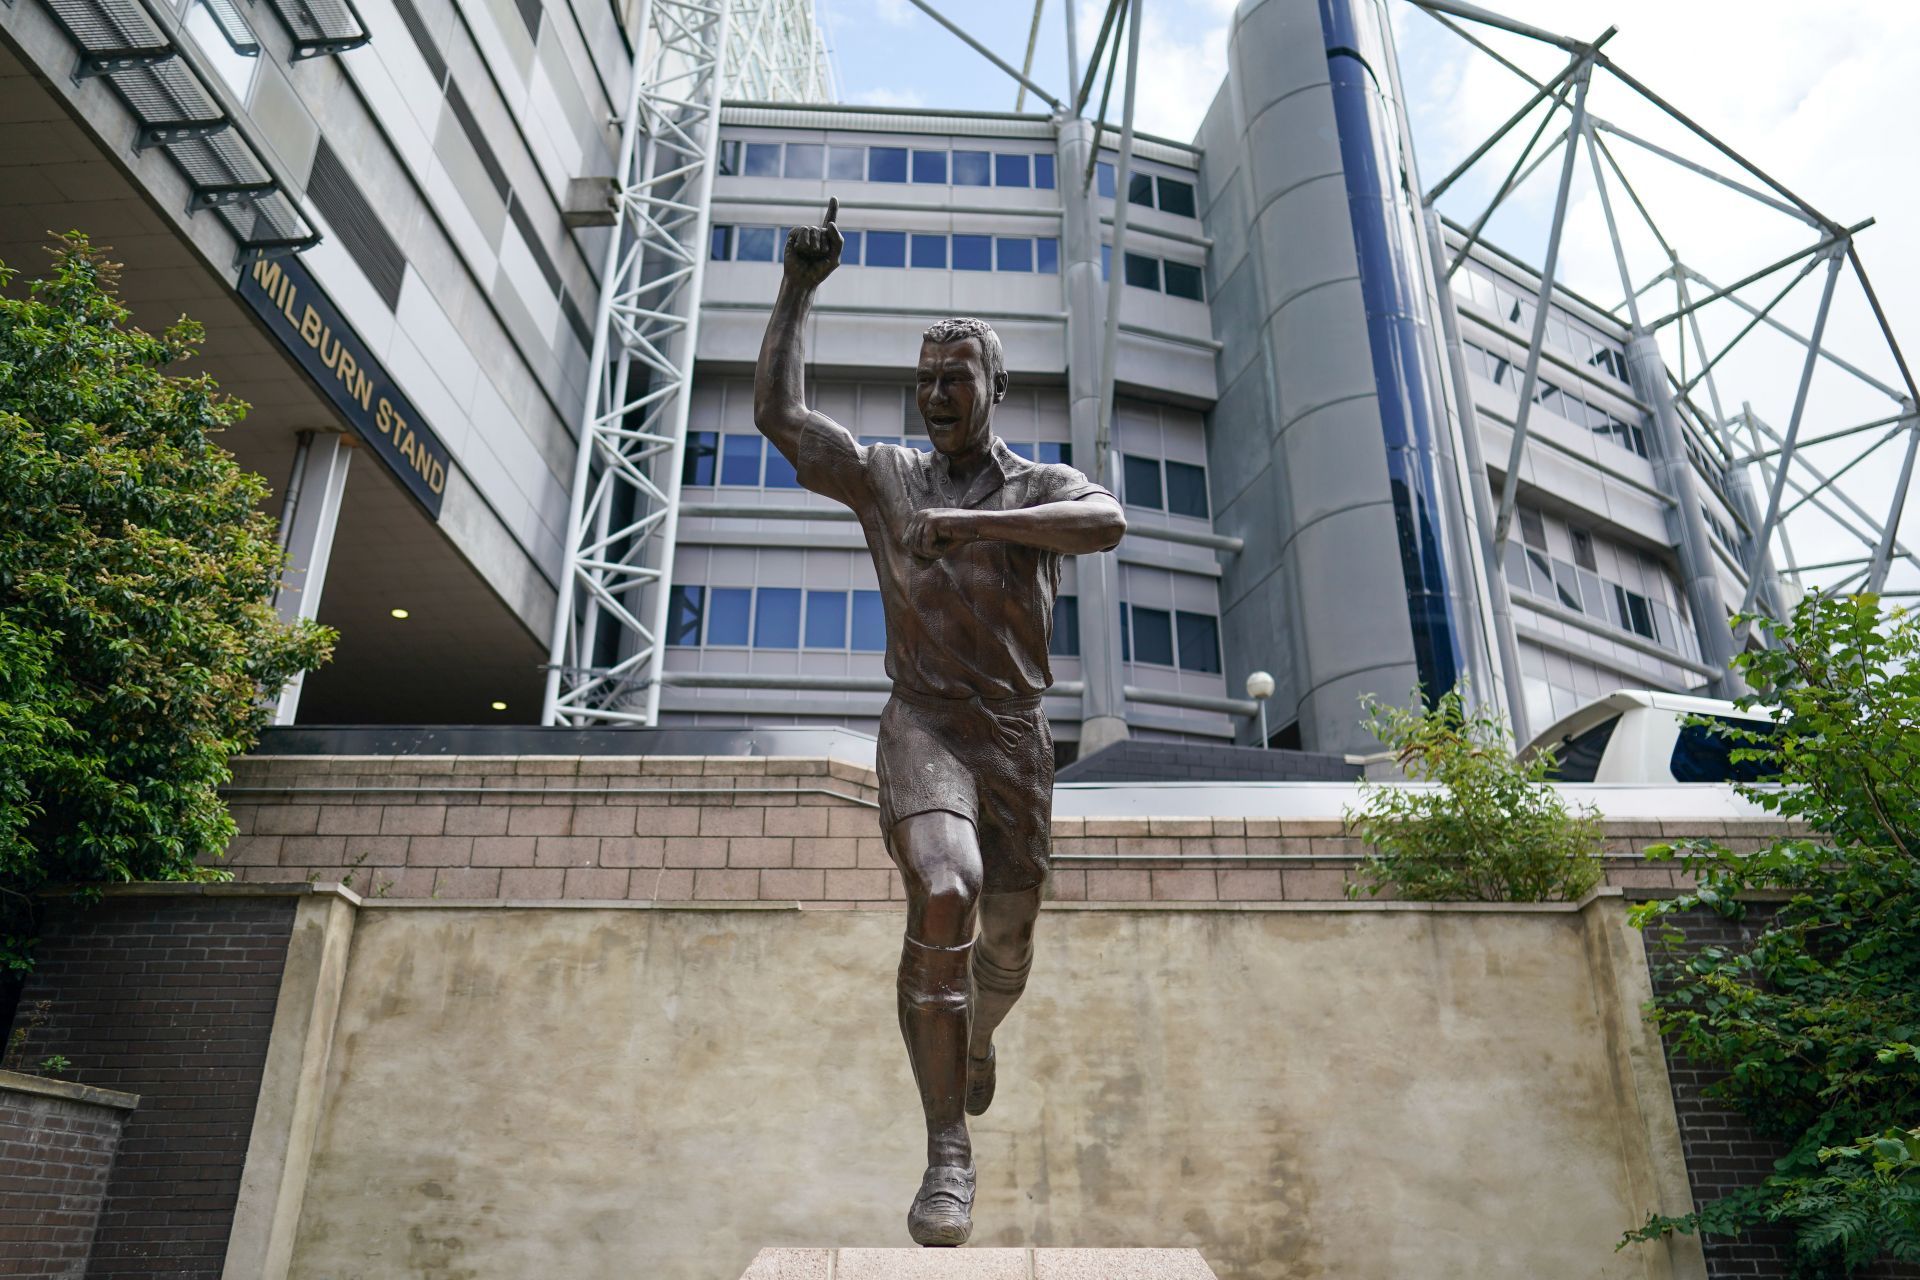 Alan Shearer is a Newcastle United legend.